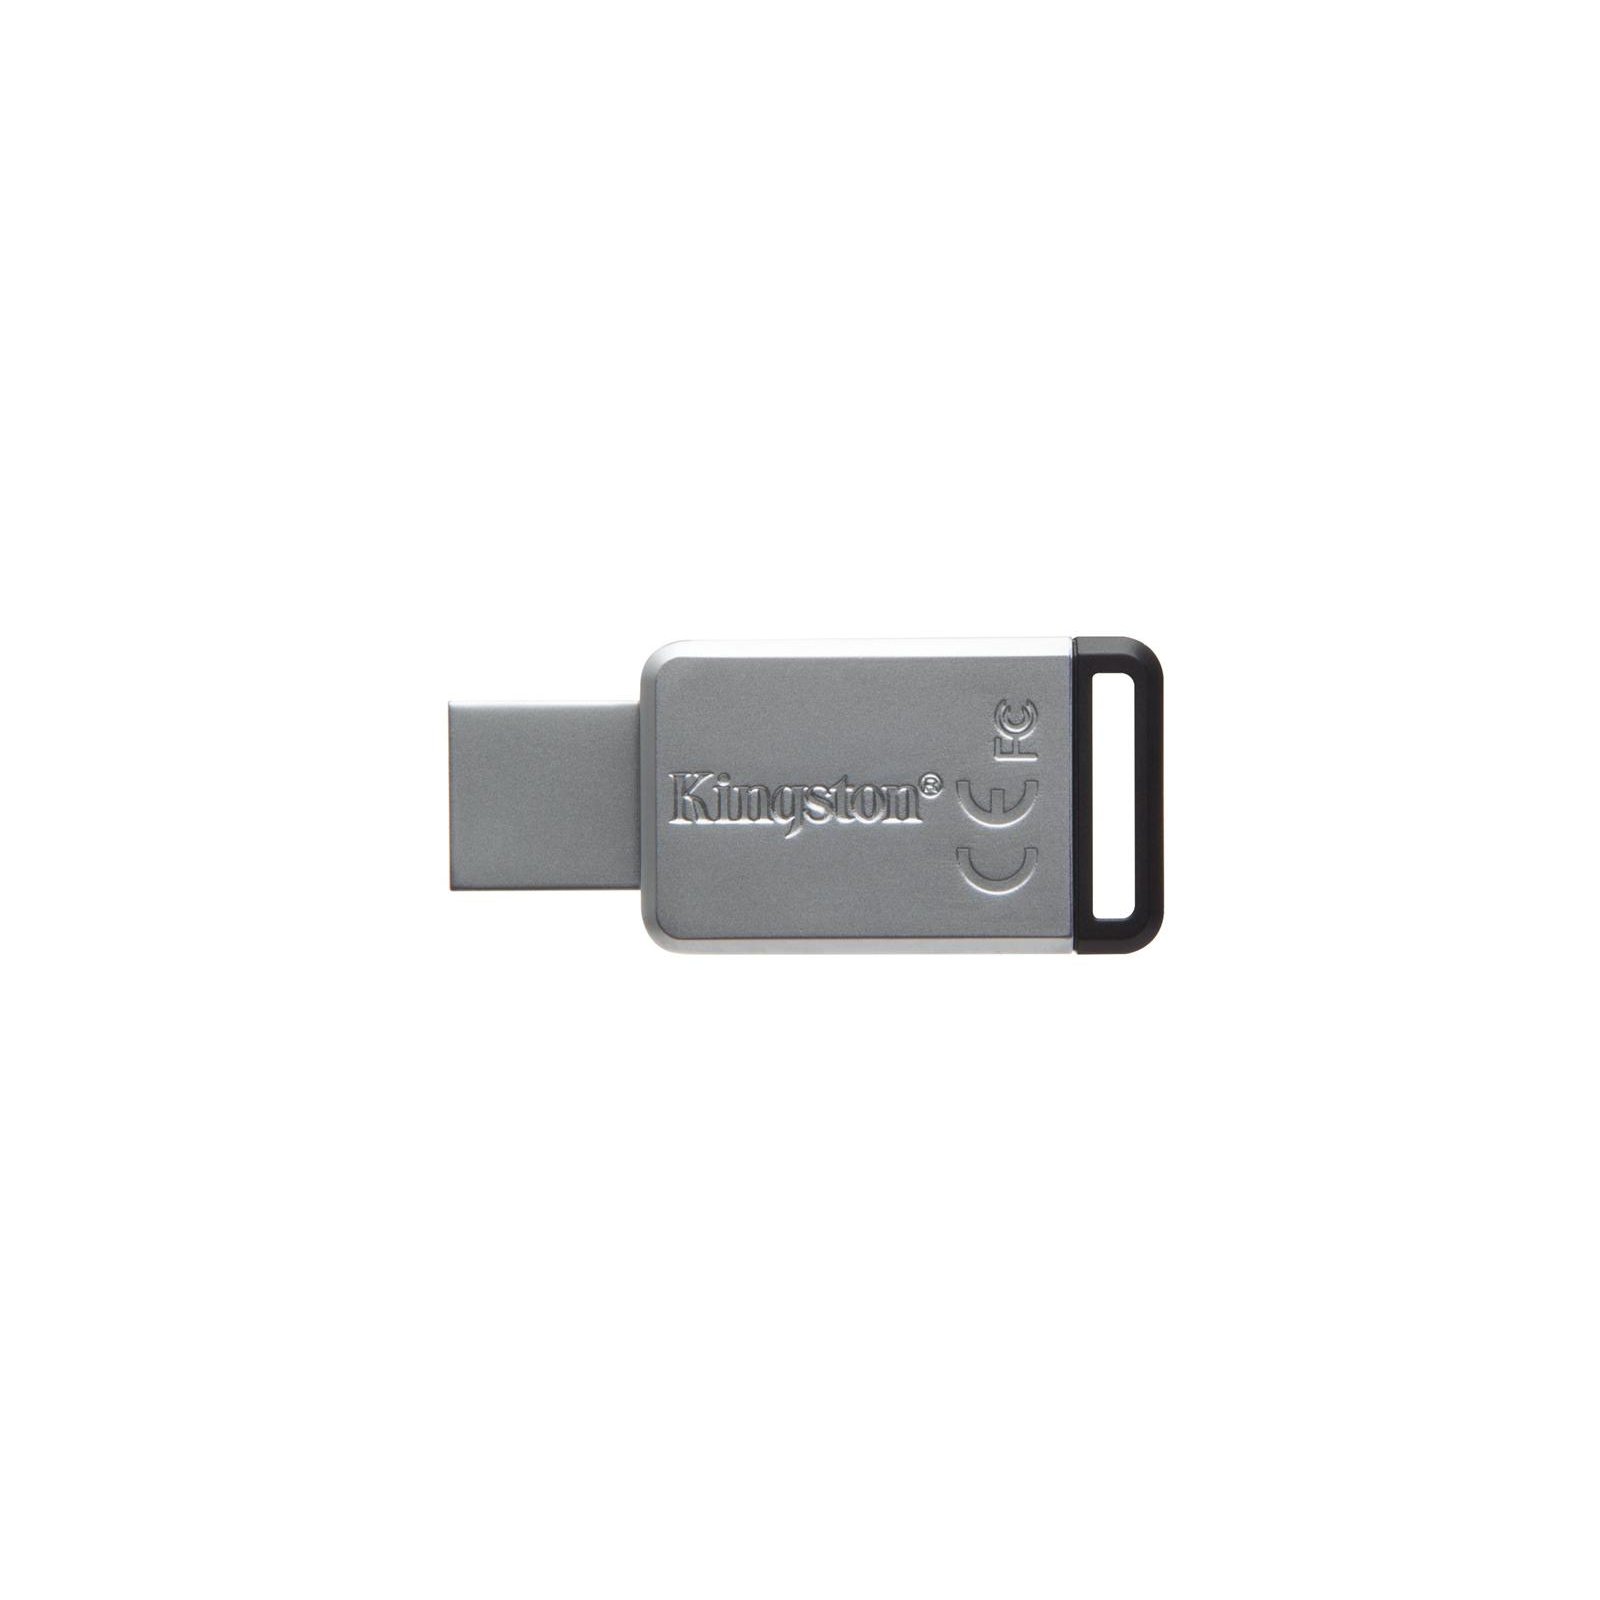 USB флеш накопитель Kingston 16GB DT50 USB 3.1 (DT50/16GB) изображение 2